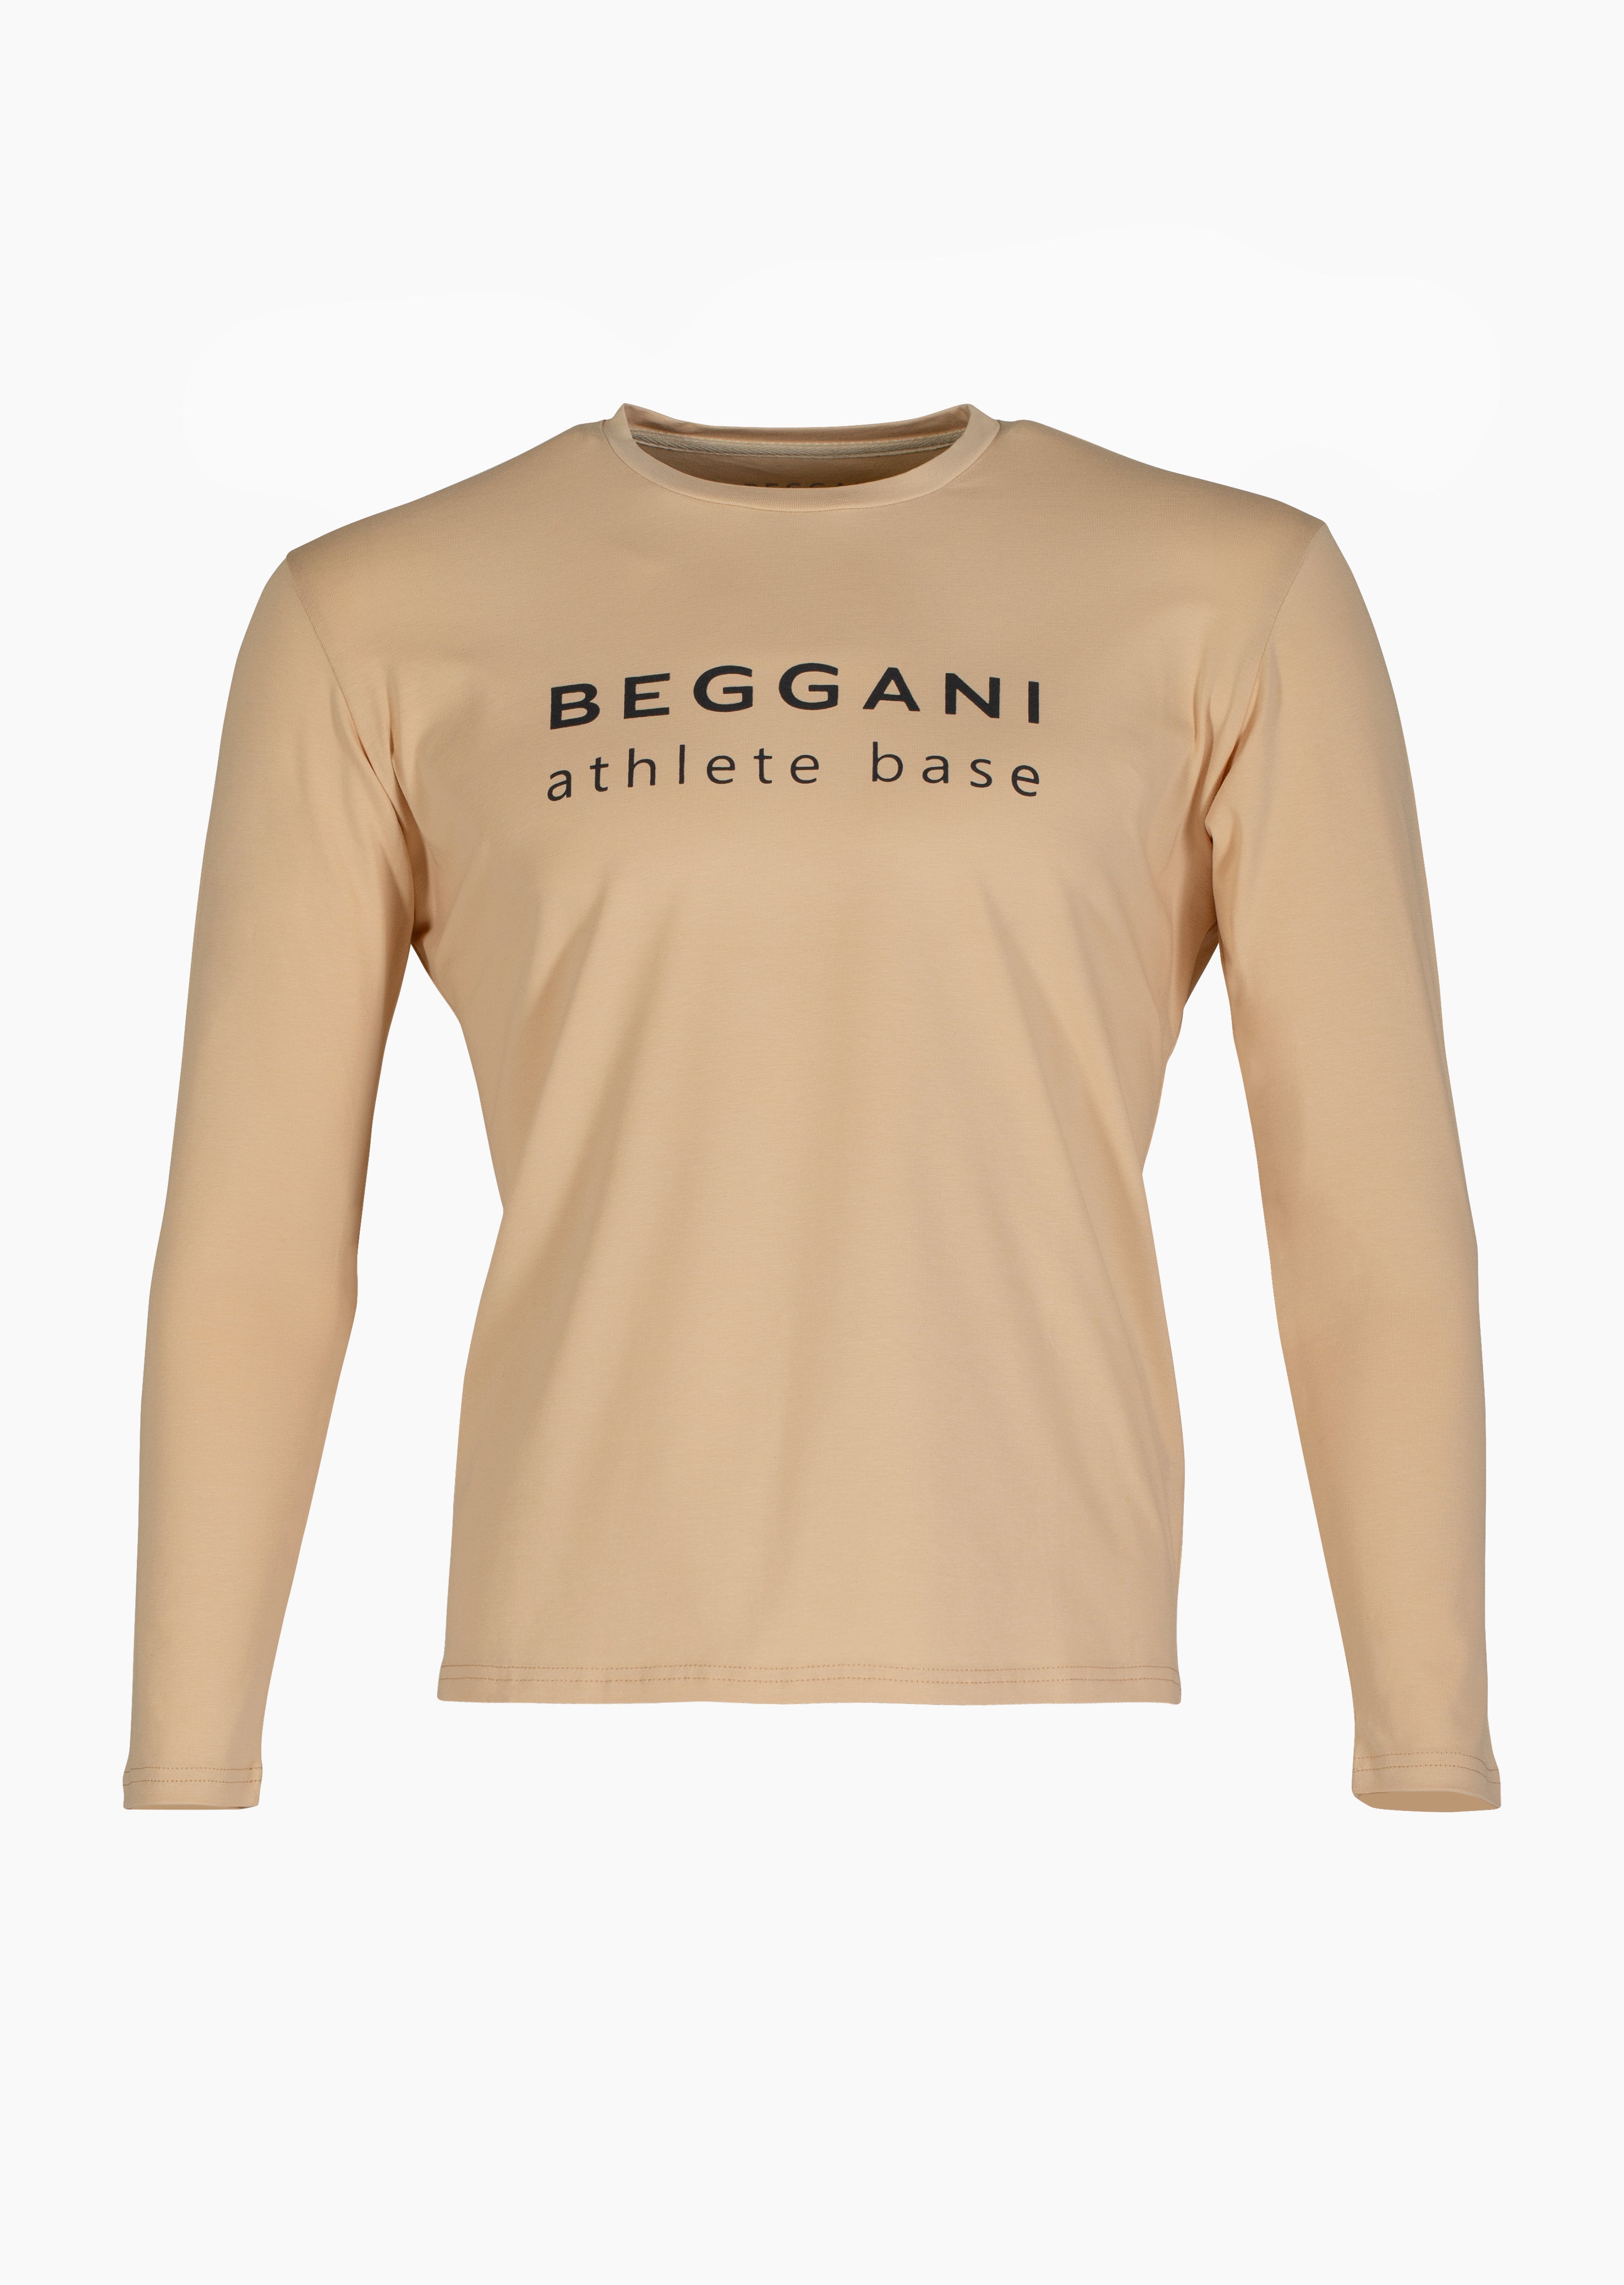 Men's Long-sleeved T-shirt BEGGANI athlete base